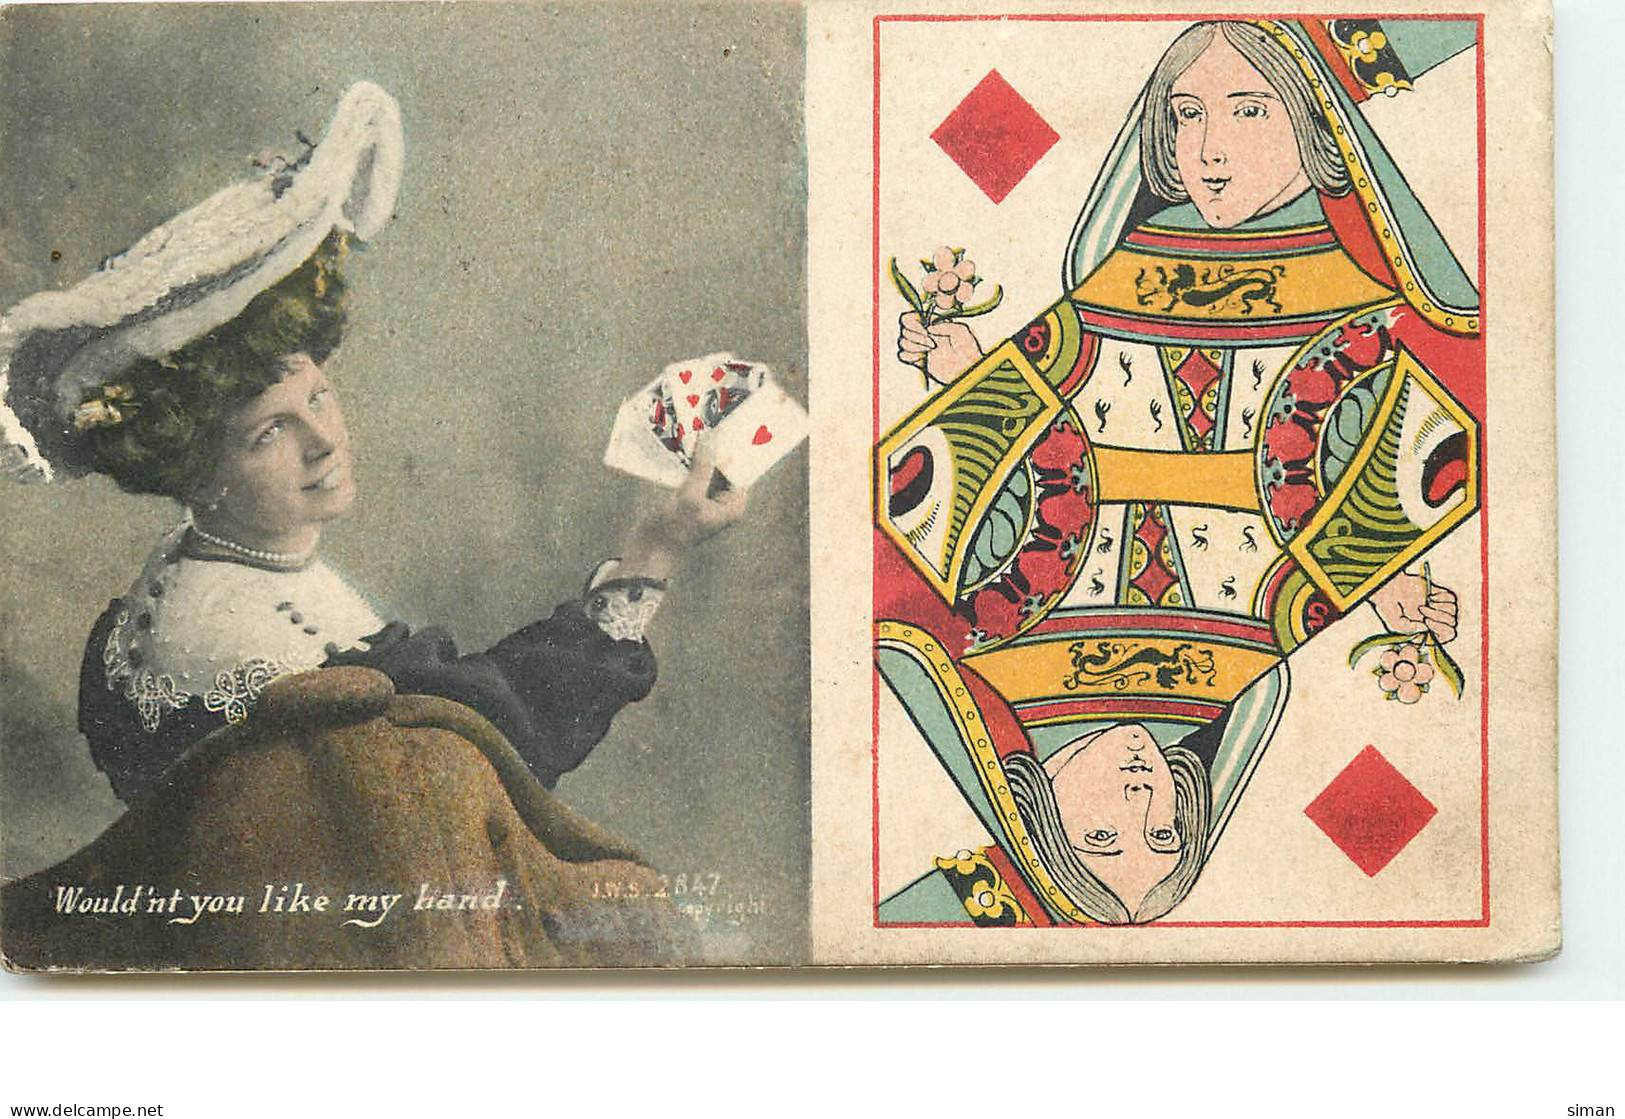 N°16966 - Dame De Carreau - Would'nt You Like My Hand - Cartes à Jouer